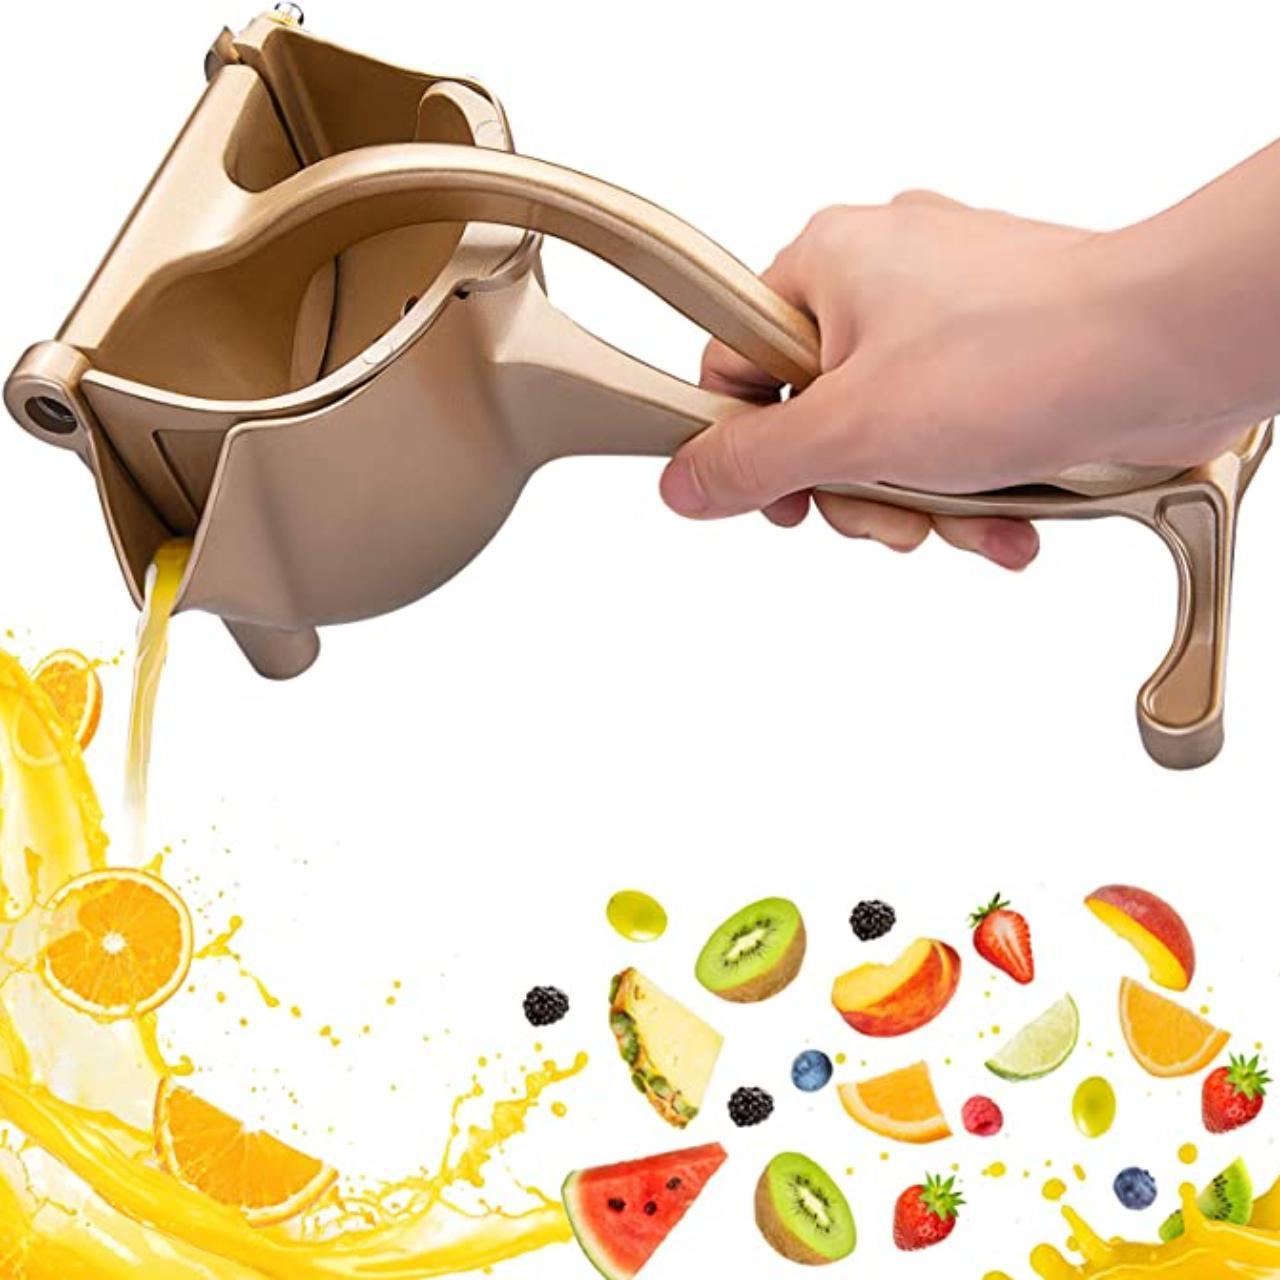 Product Image 3 - Automoness Manual Fruit Juicer, Hand